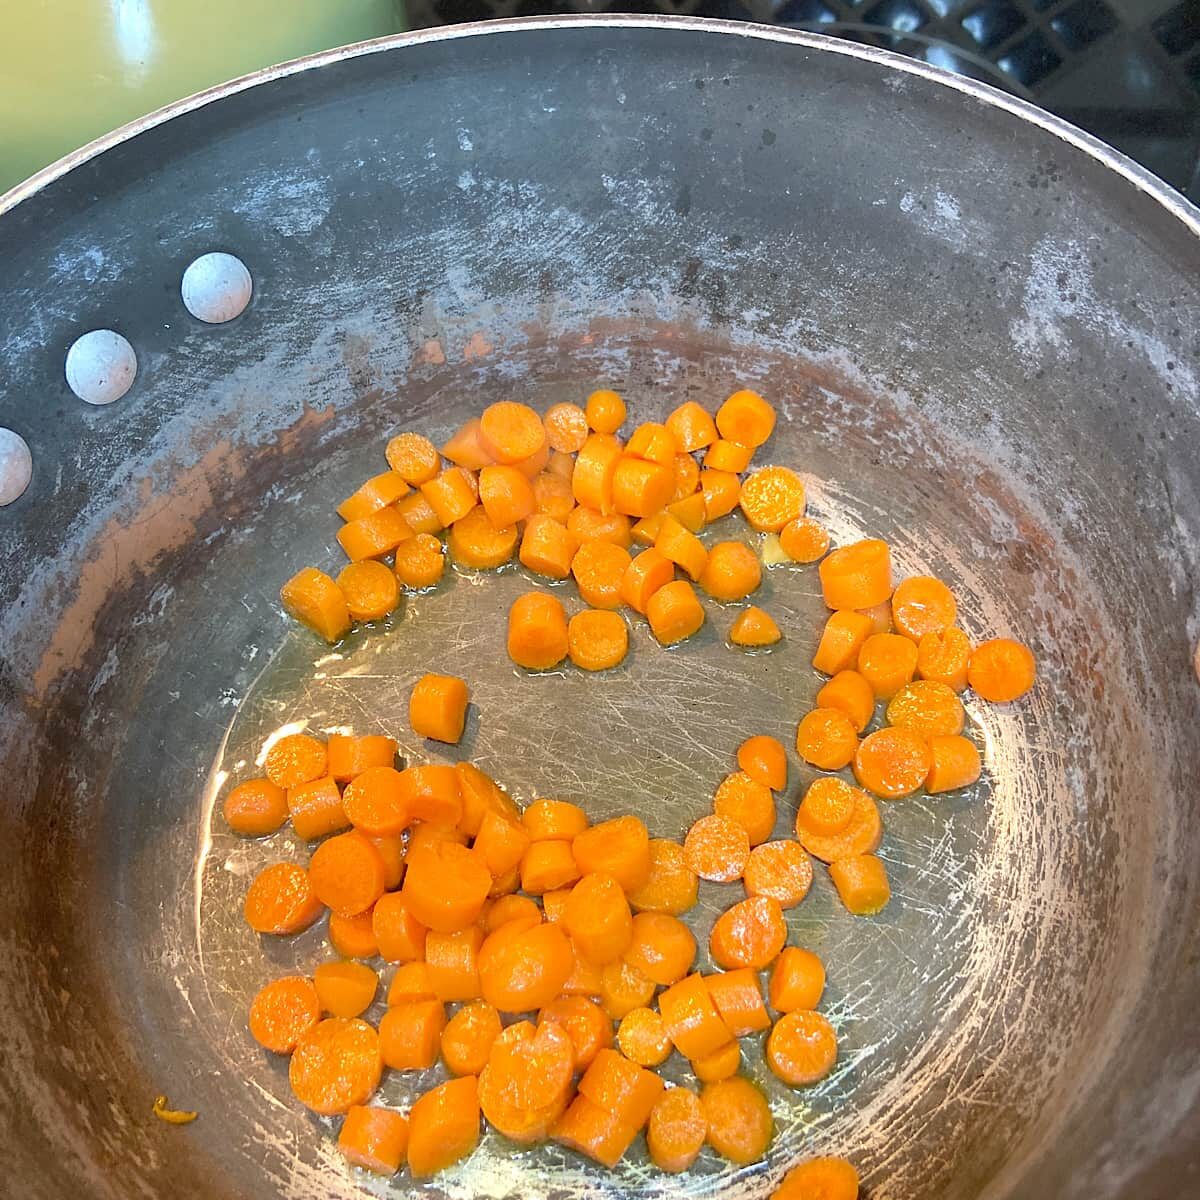 saute carrots in olive oil